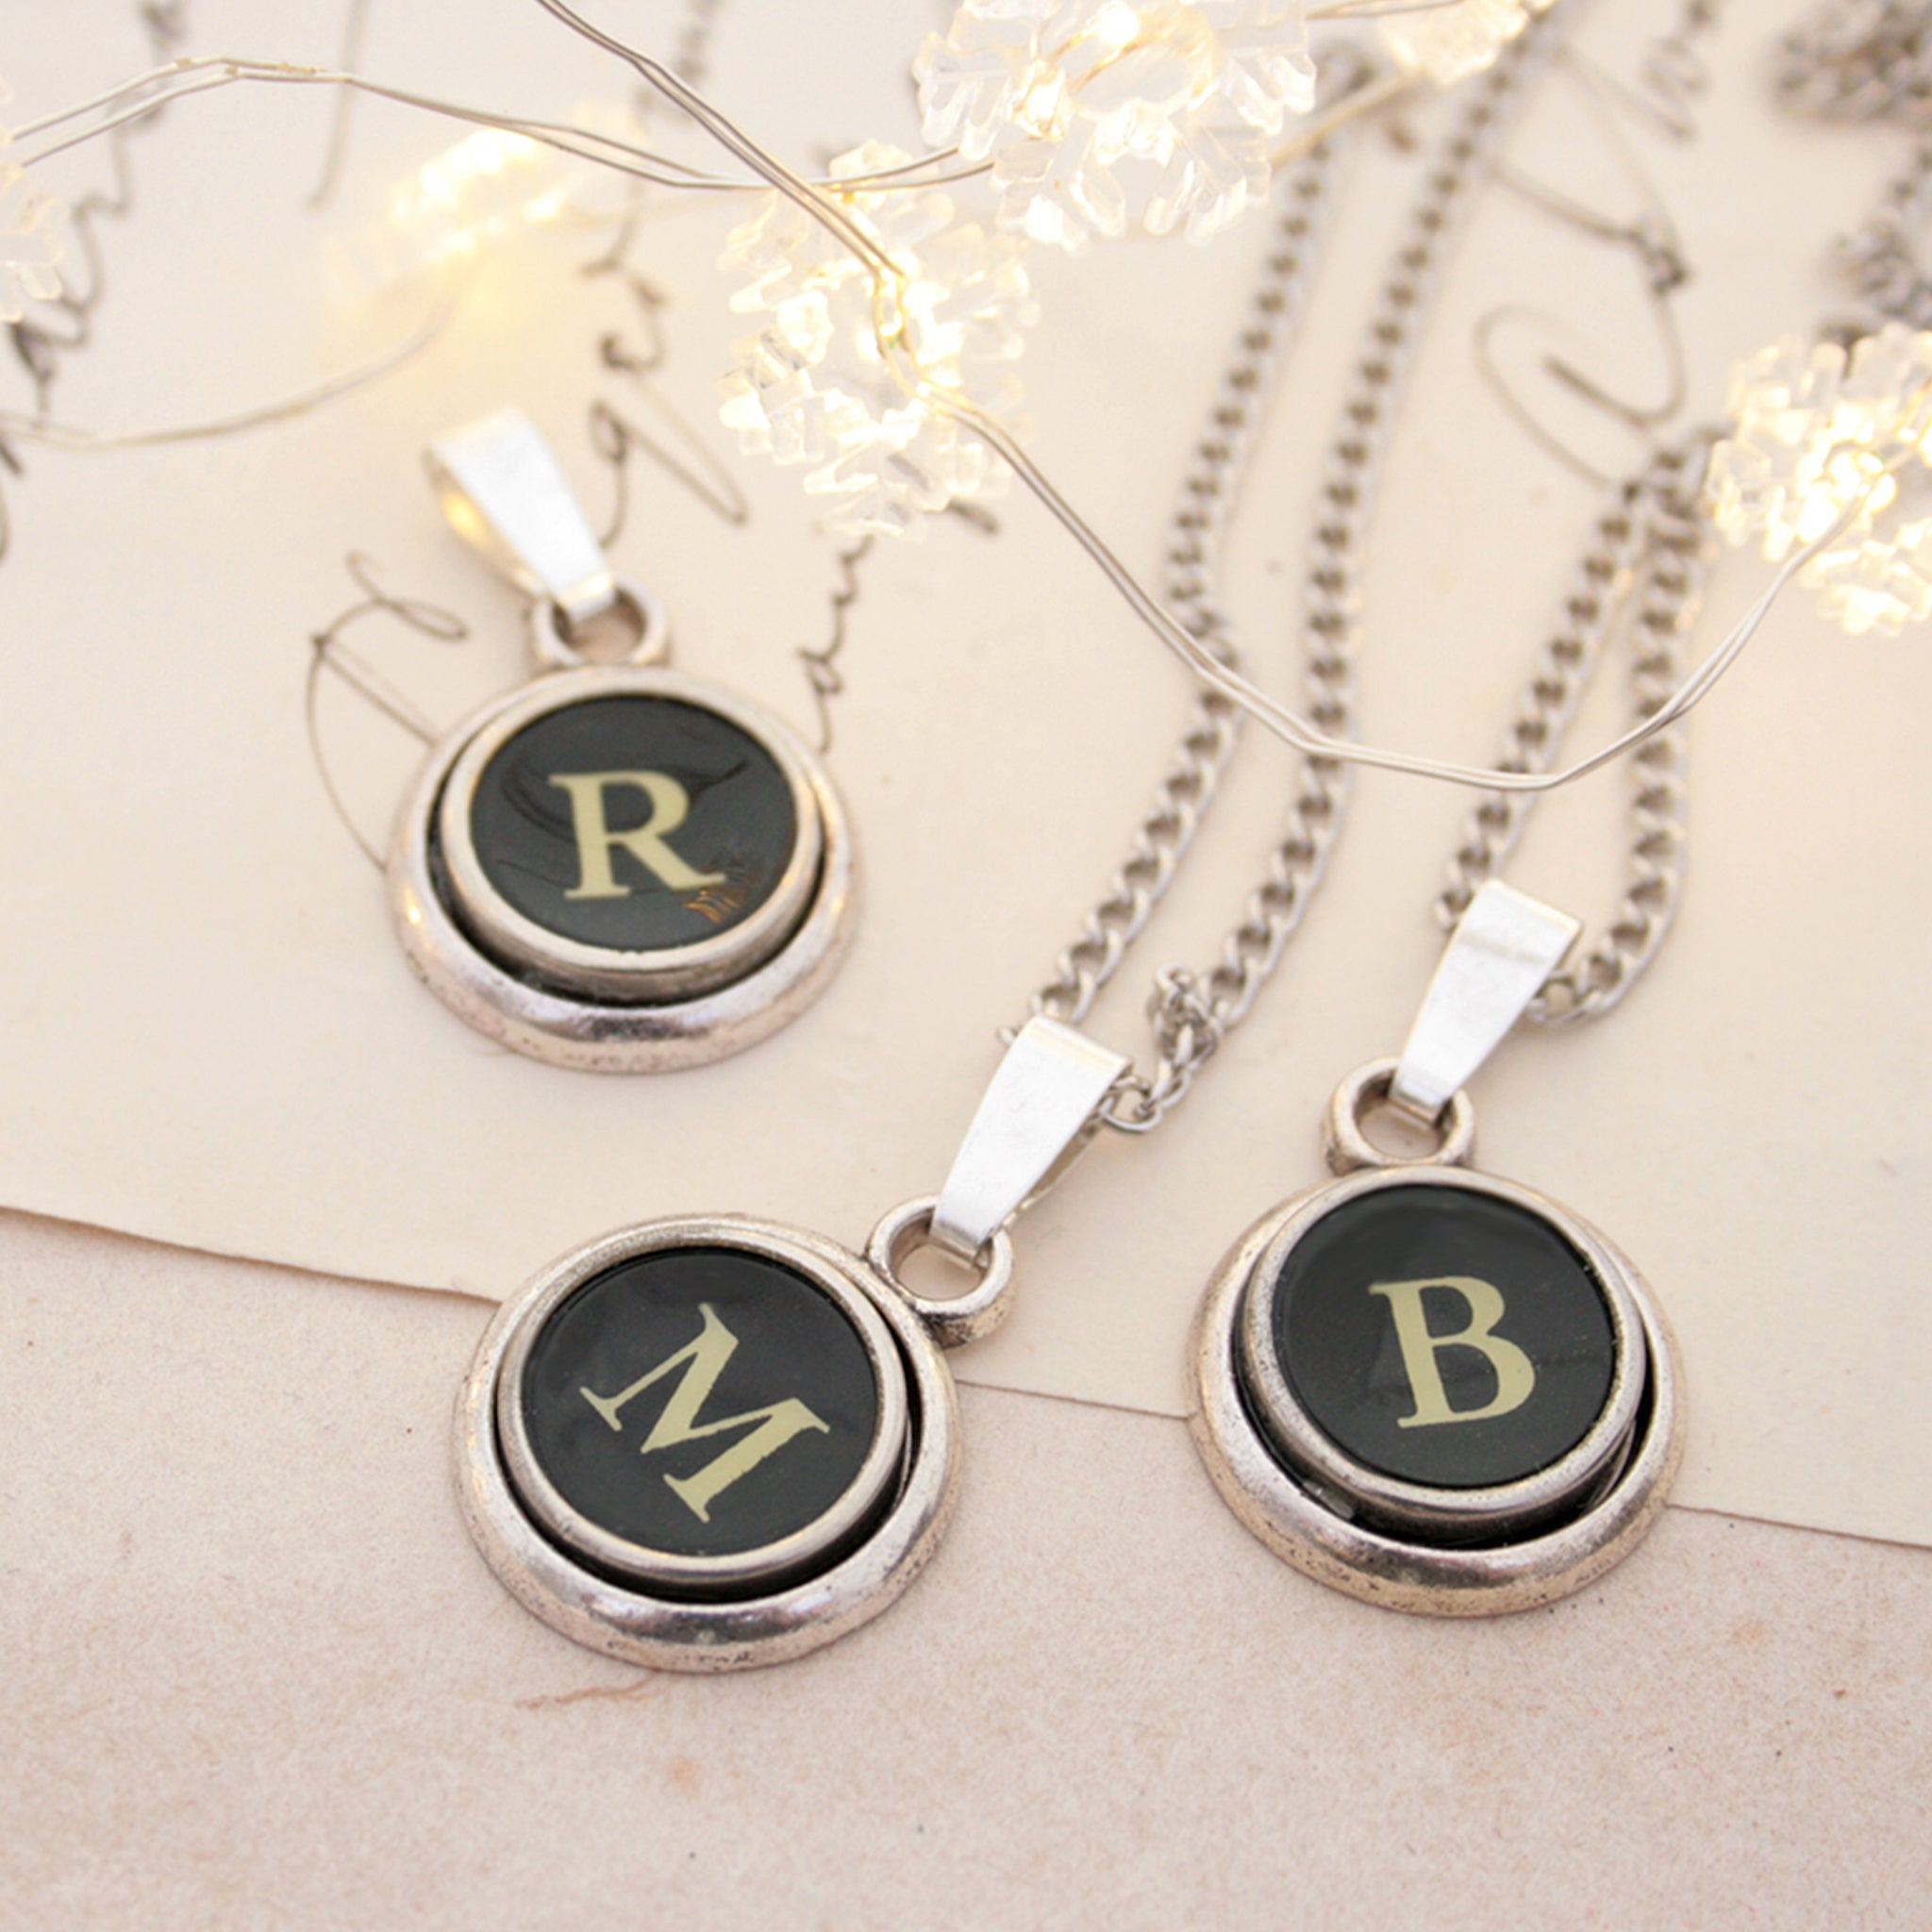 R letter, M letter, B letter typewriter necklaces made of real typewriter keys